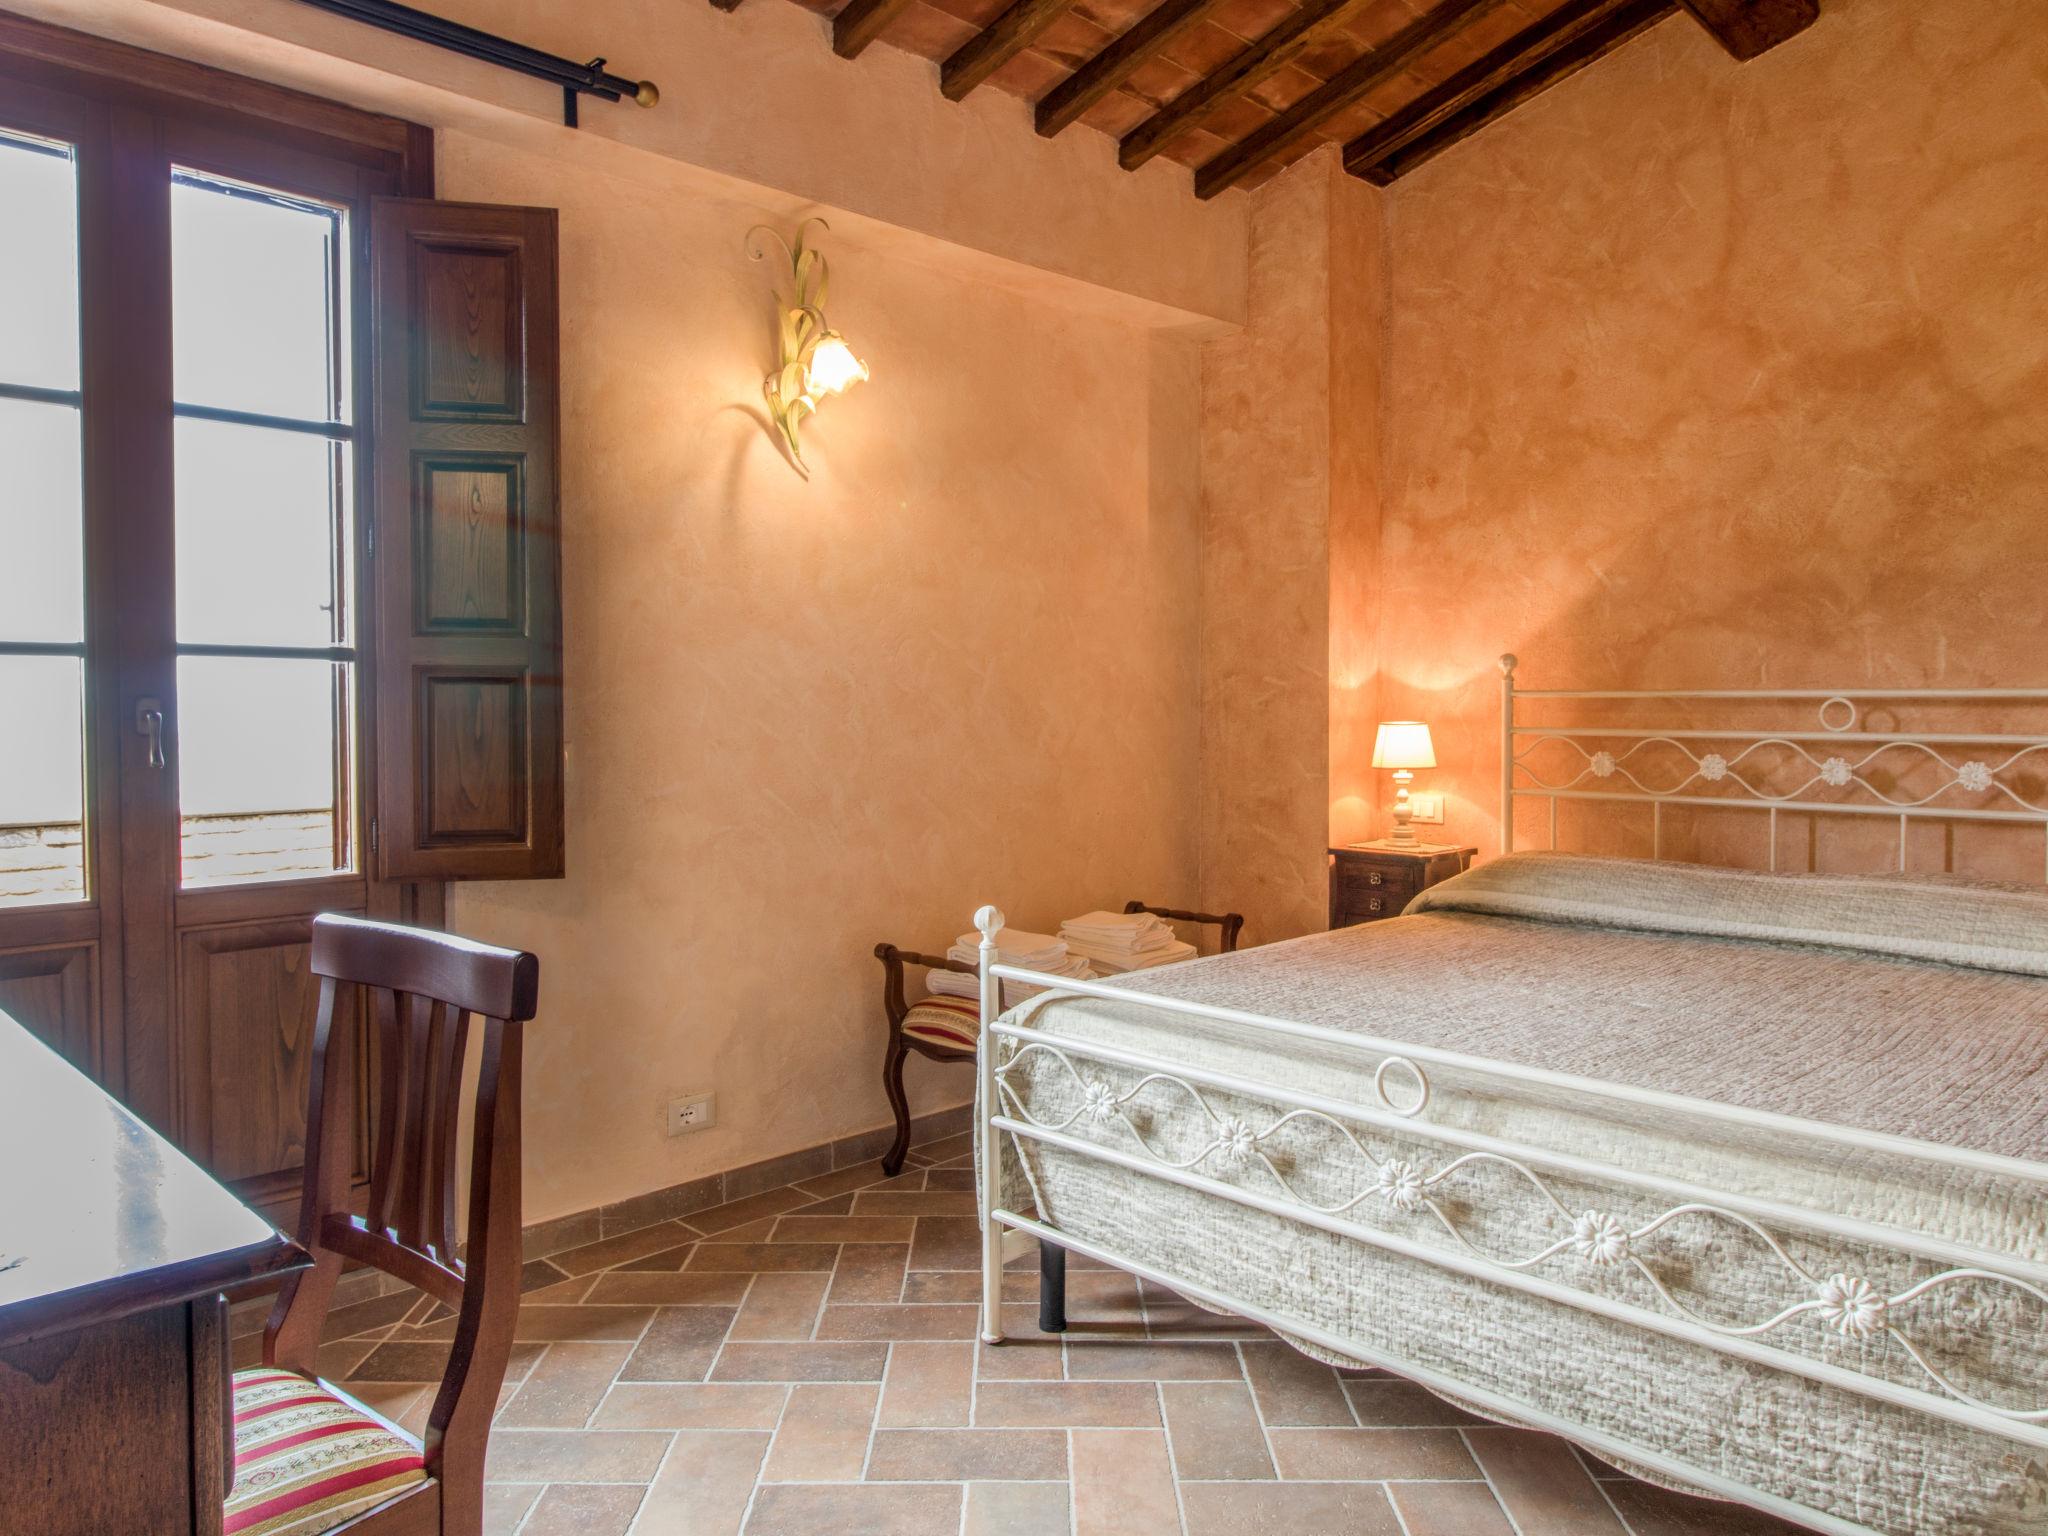 Foto 12 - Haus mit 5 Schlafzimmern in Civitella in Val di Chiana mit privater pool und terrasse